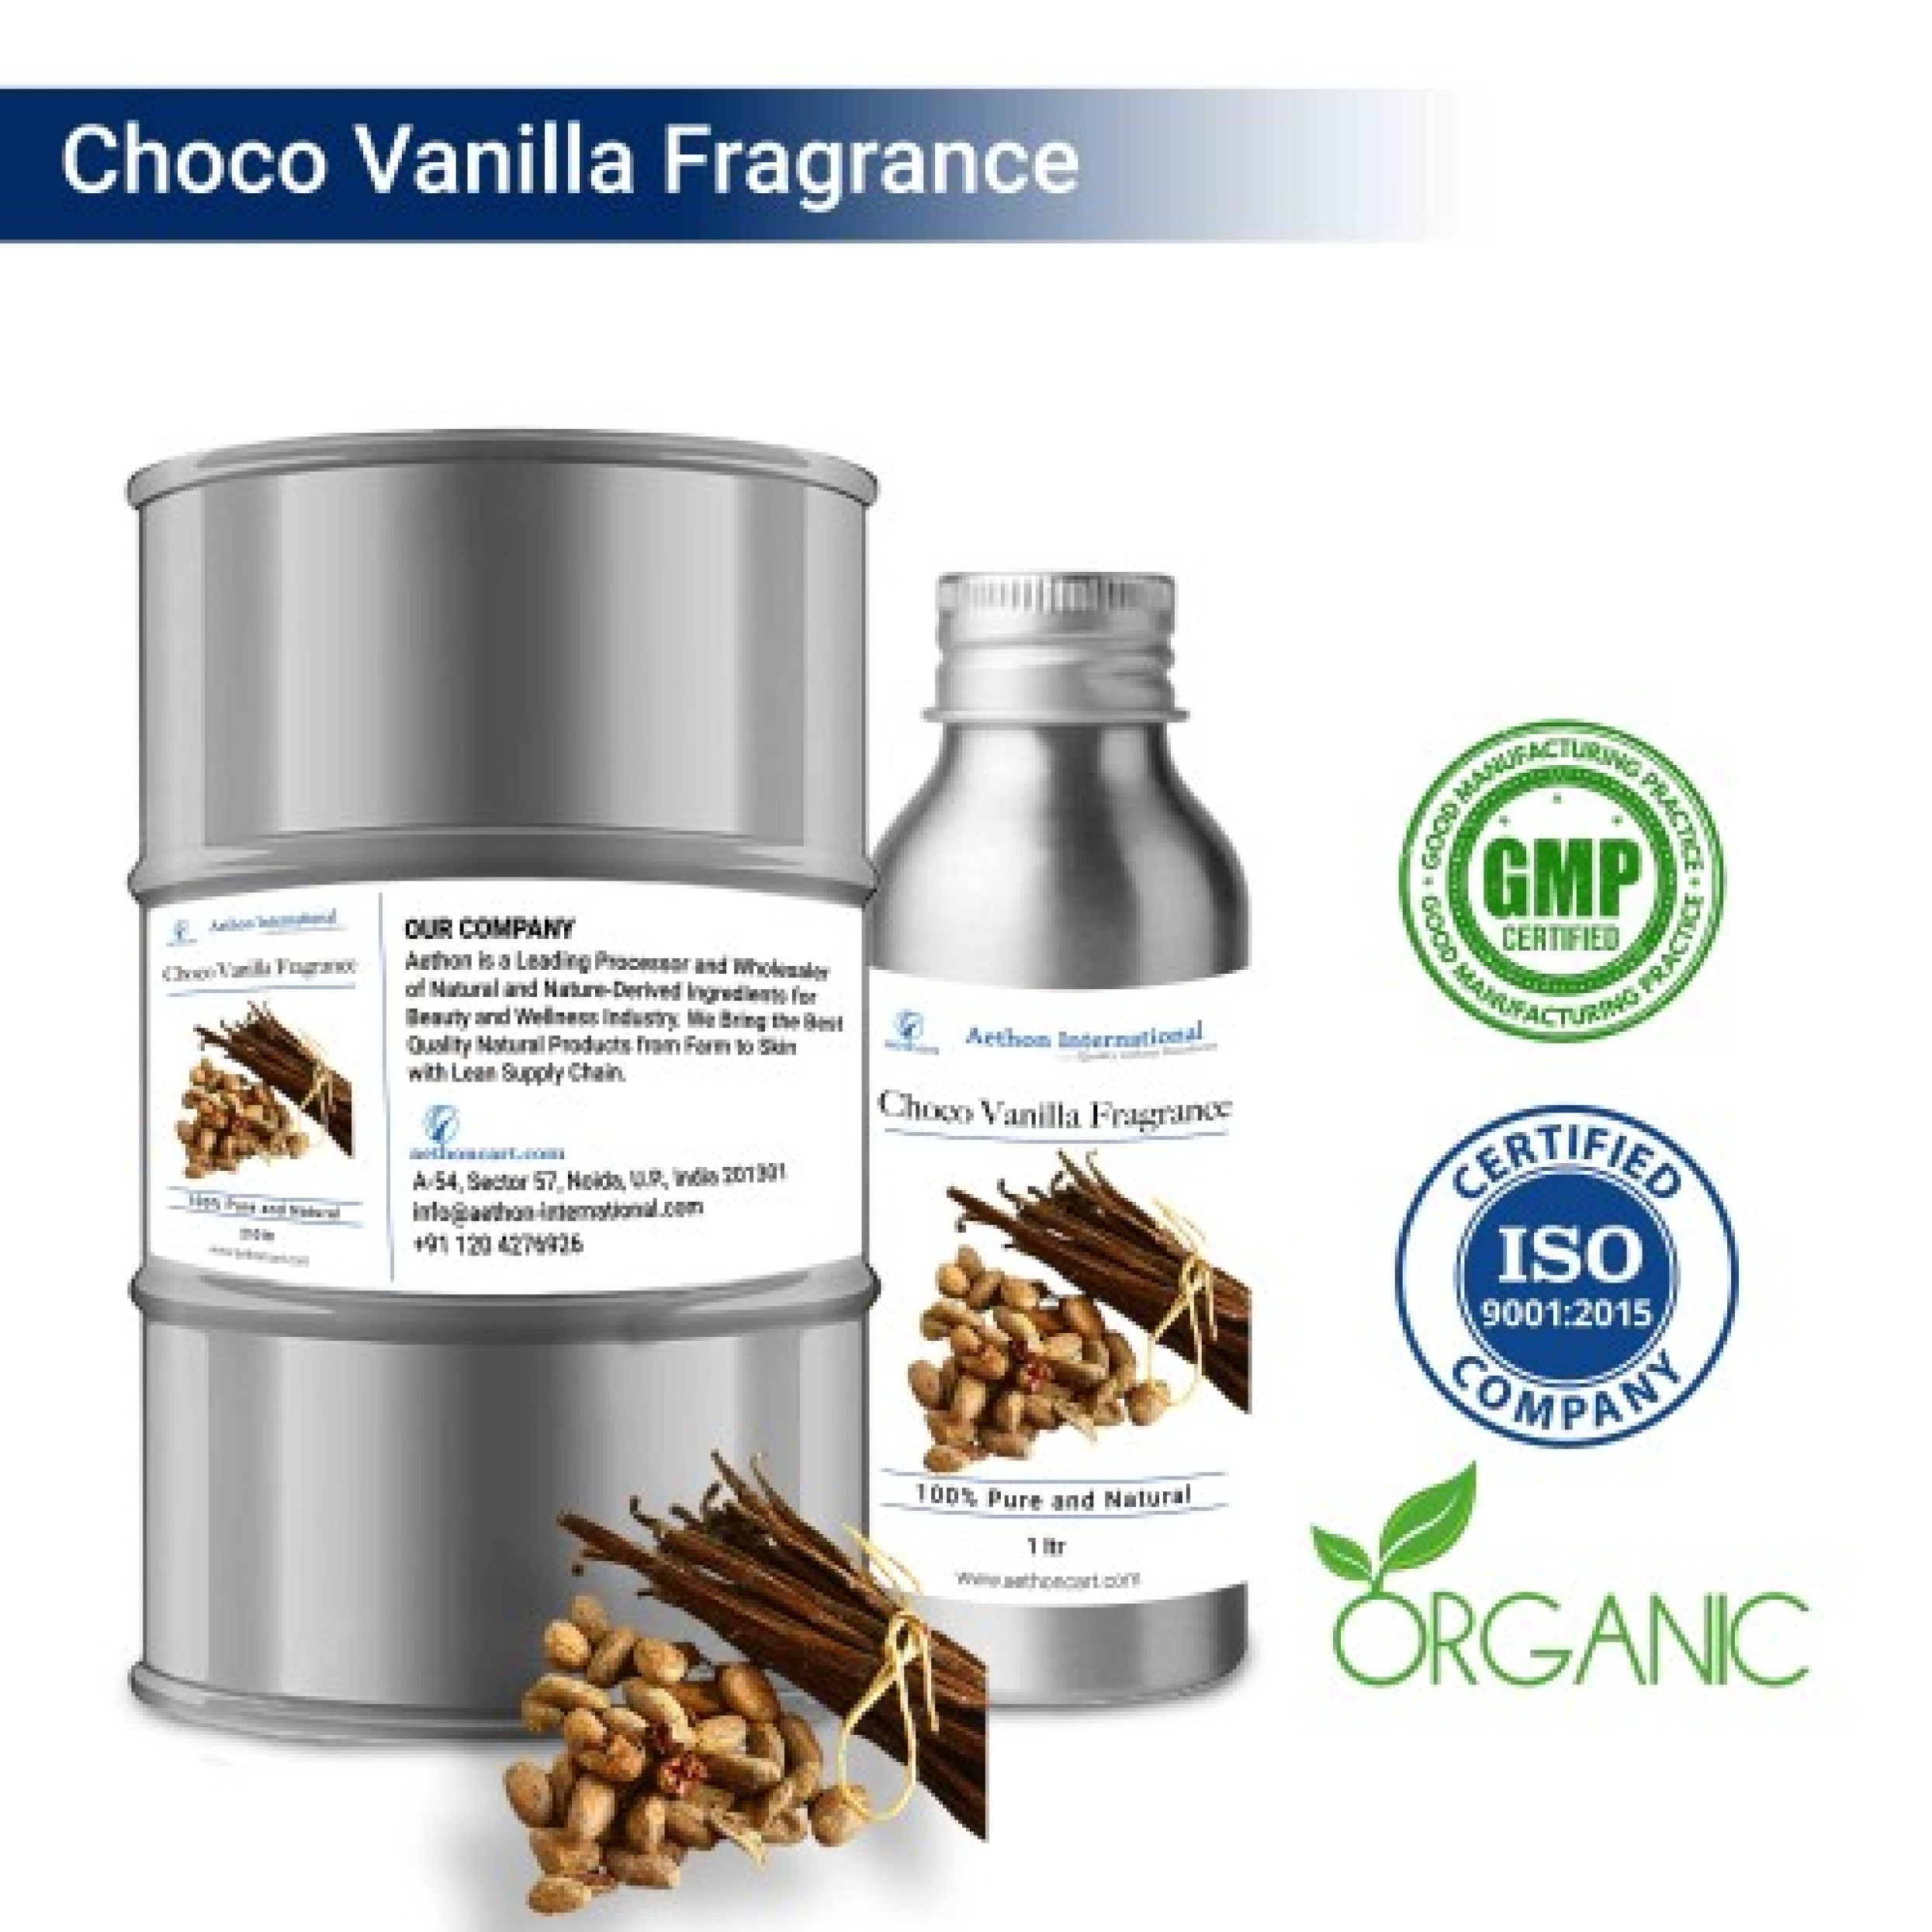 Choco Vanilla Fragrance